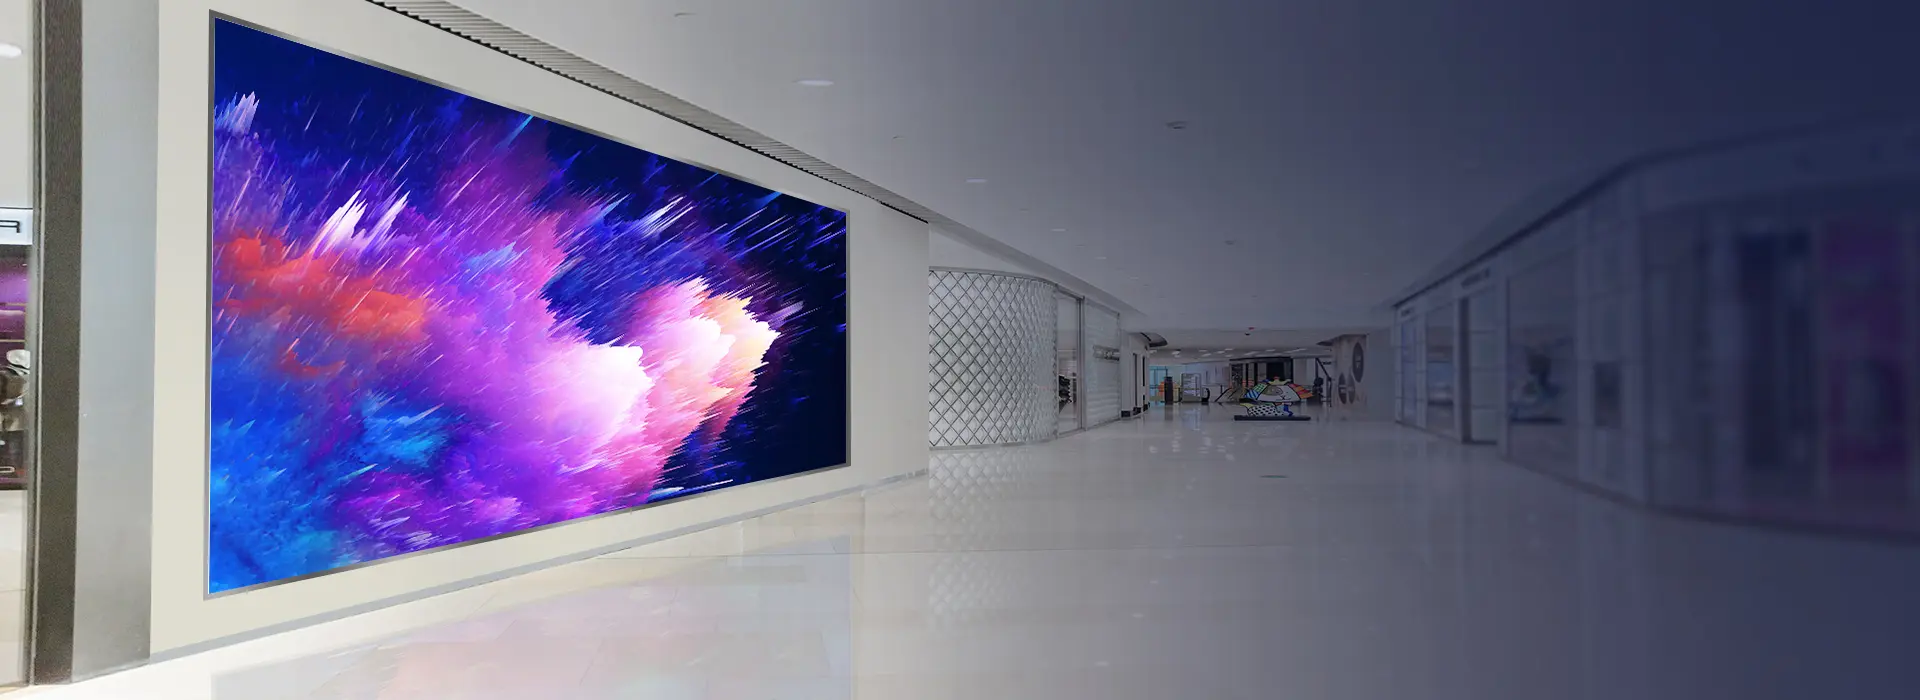 giant-led-screen